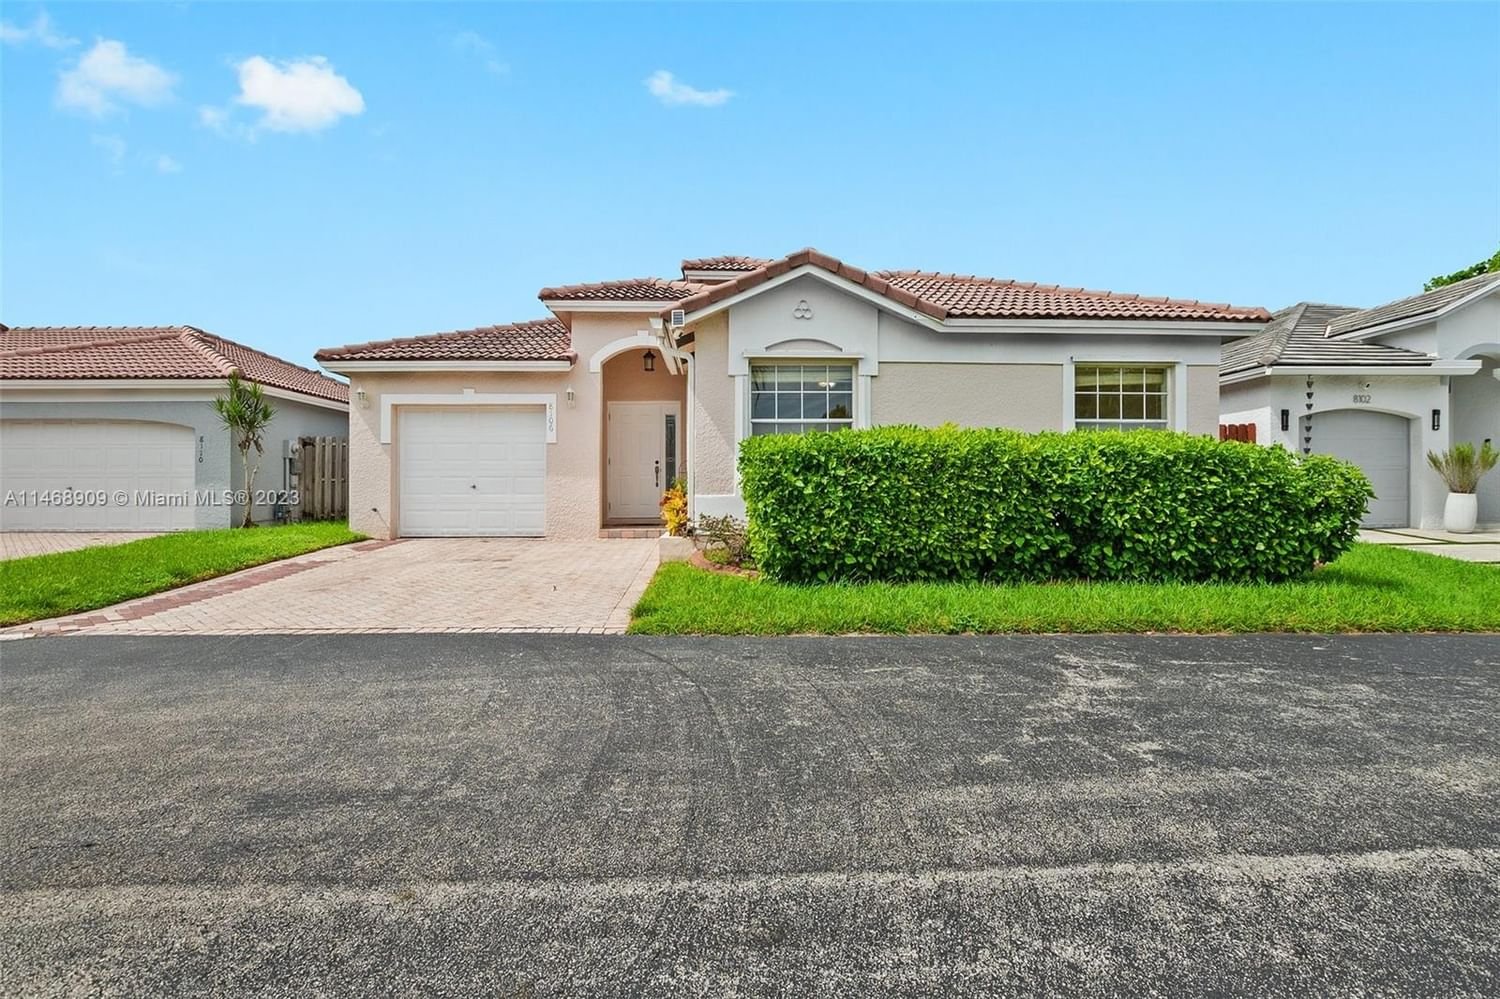 Real estate property located at 8106 158th Ave, Miami-Dade County, Miami, FL